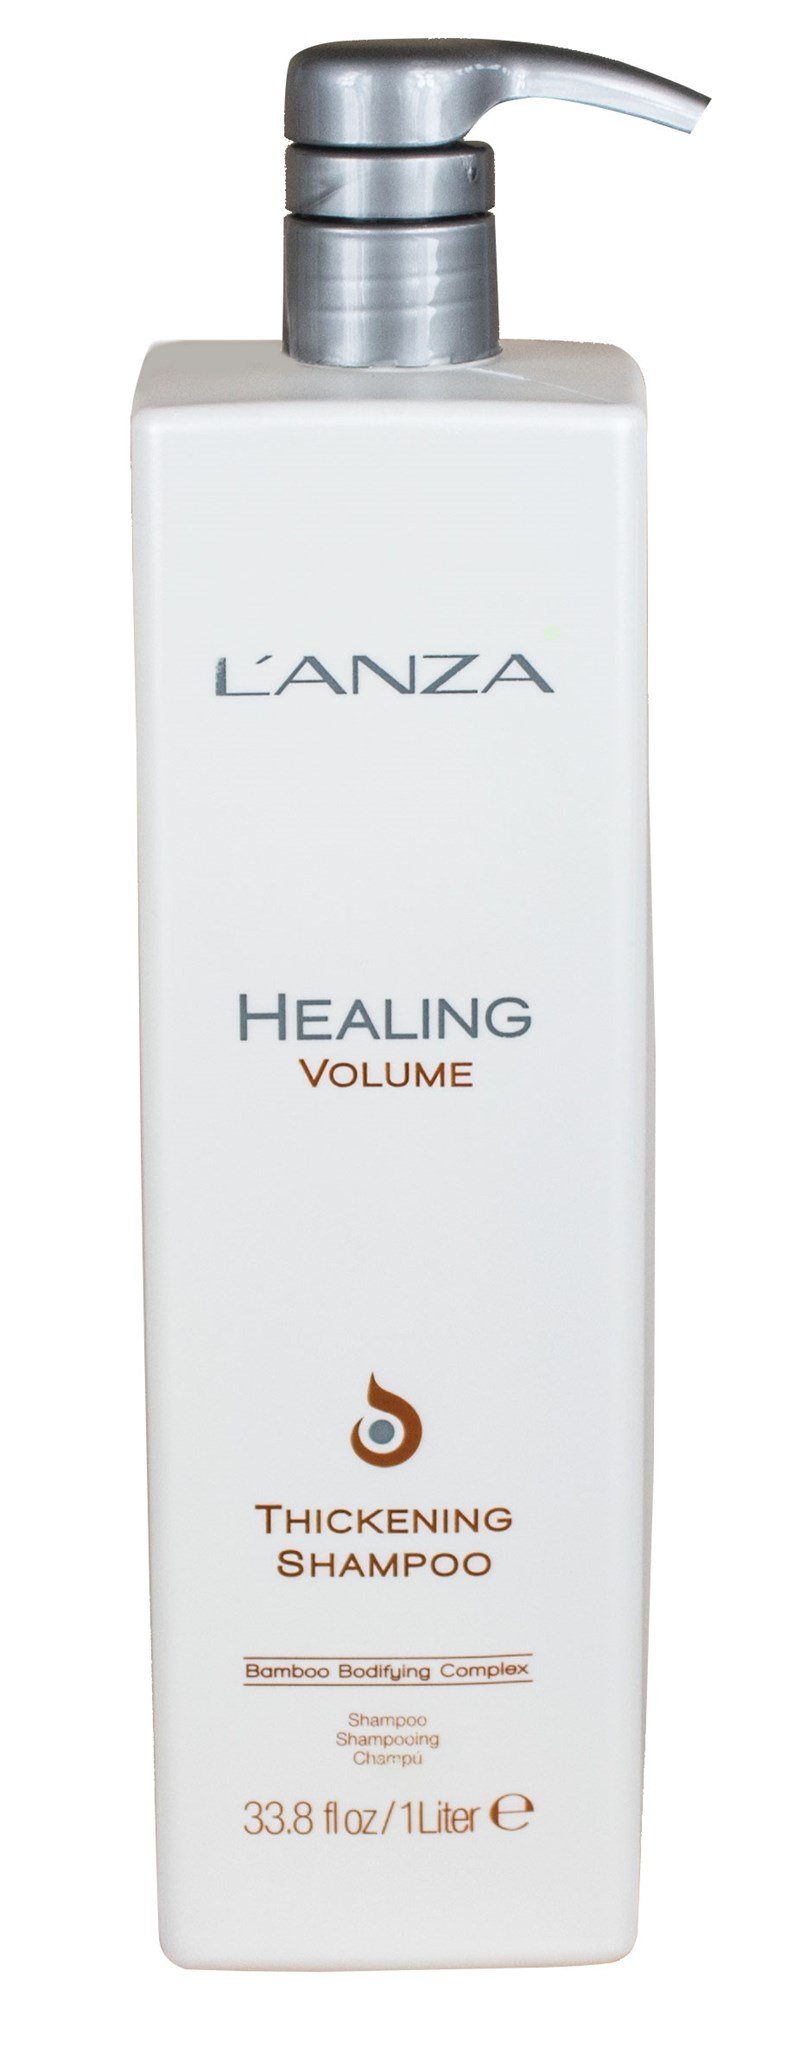 Lanza Healing Volume Thickening Shampoo Ltr